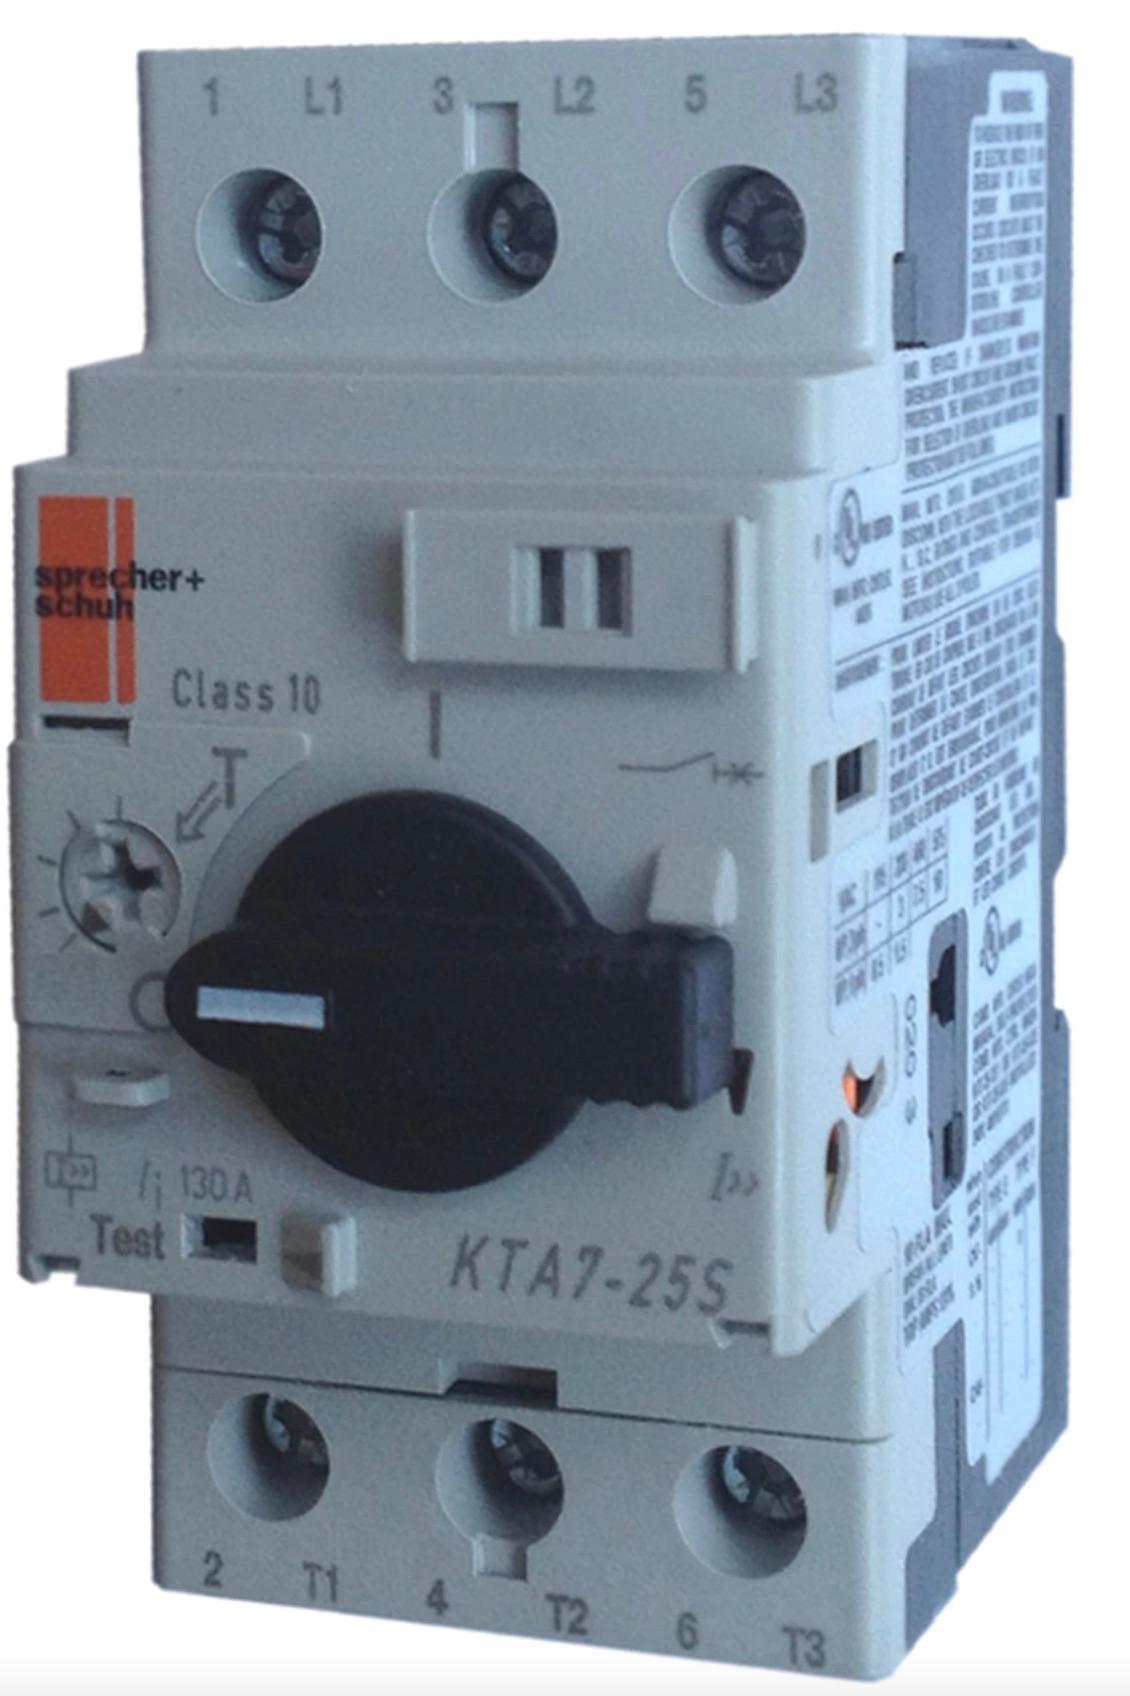 Sprecher + Schuh KTA7-25S-20A Manual motor controller, 260 Amps, 14.5...20 A Current Adjustment Range , Standard Interrupting Capacity